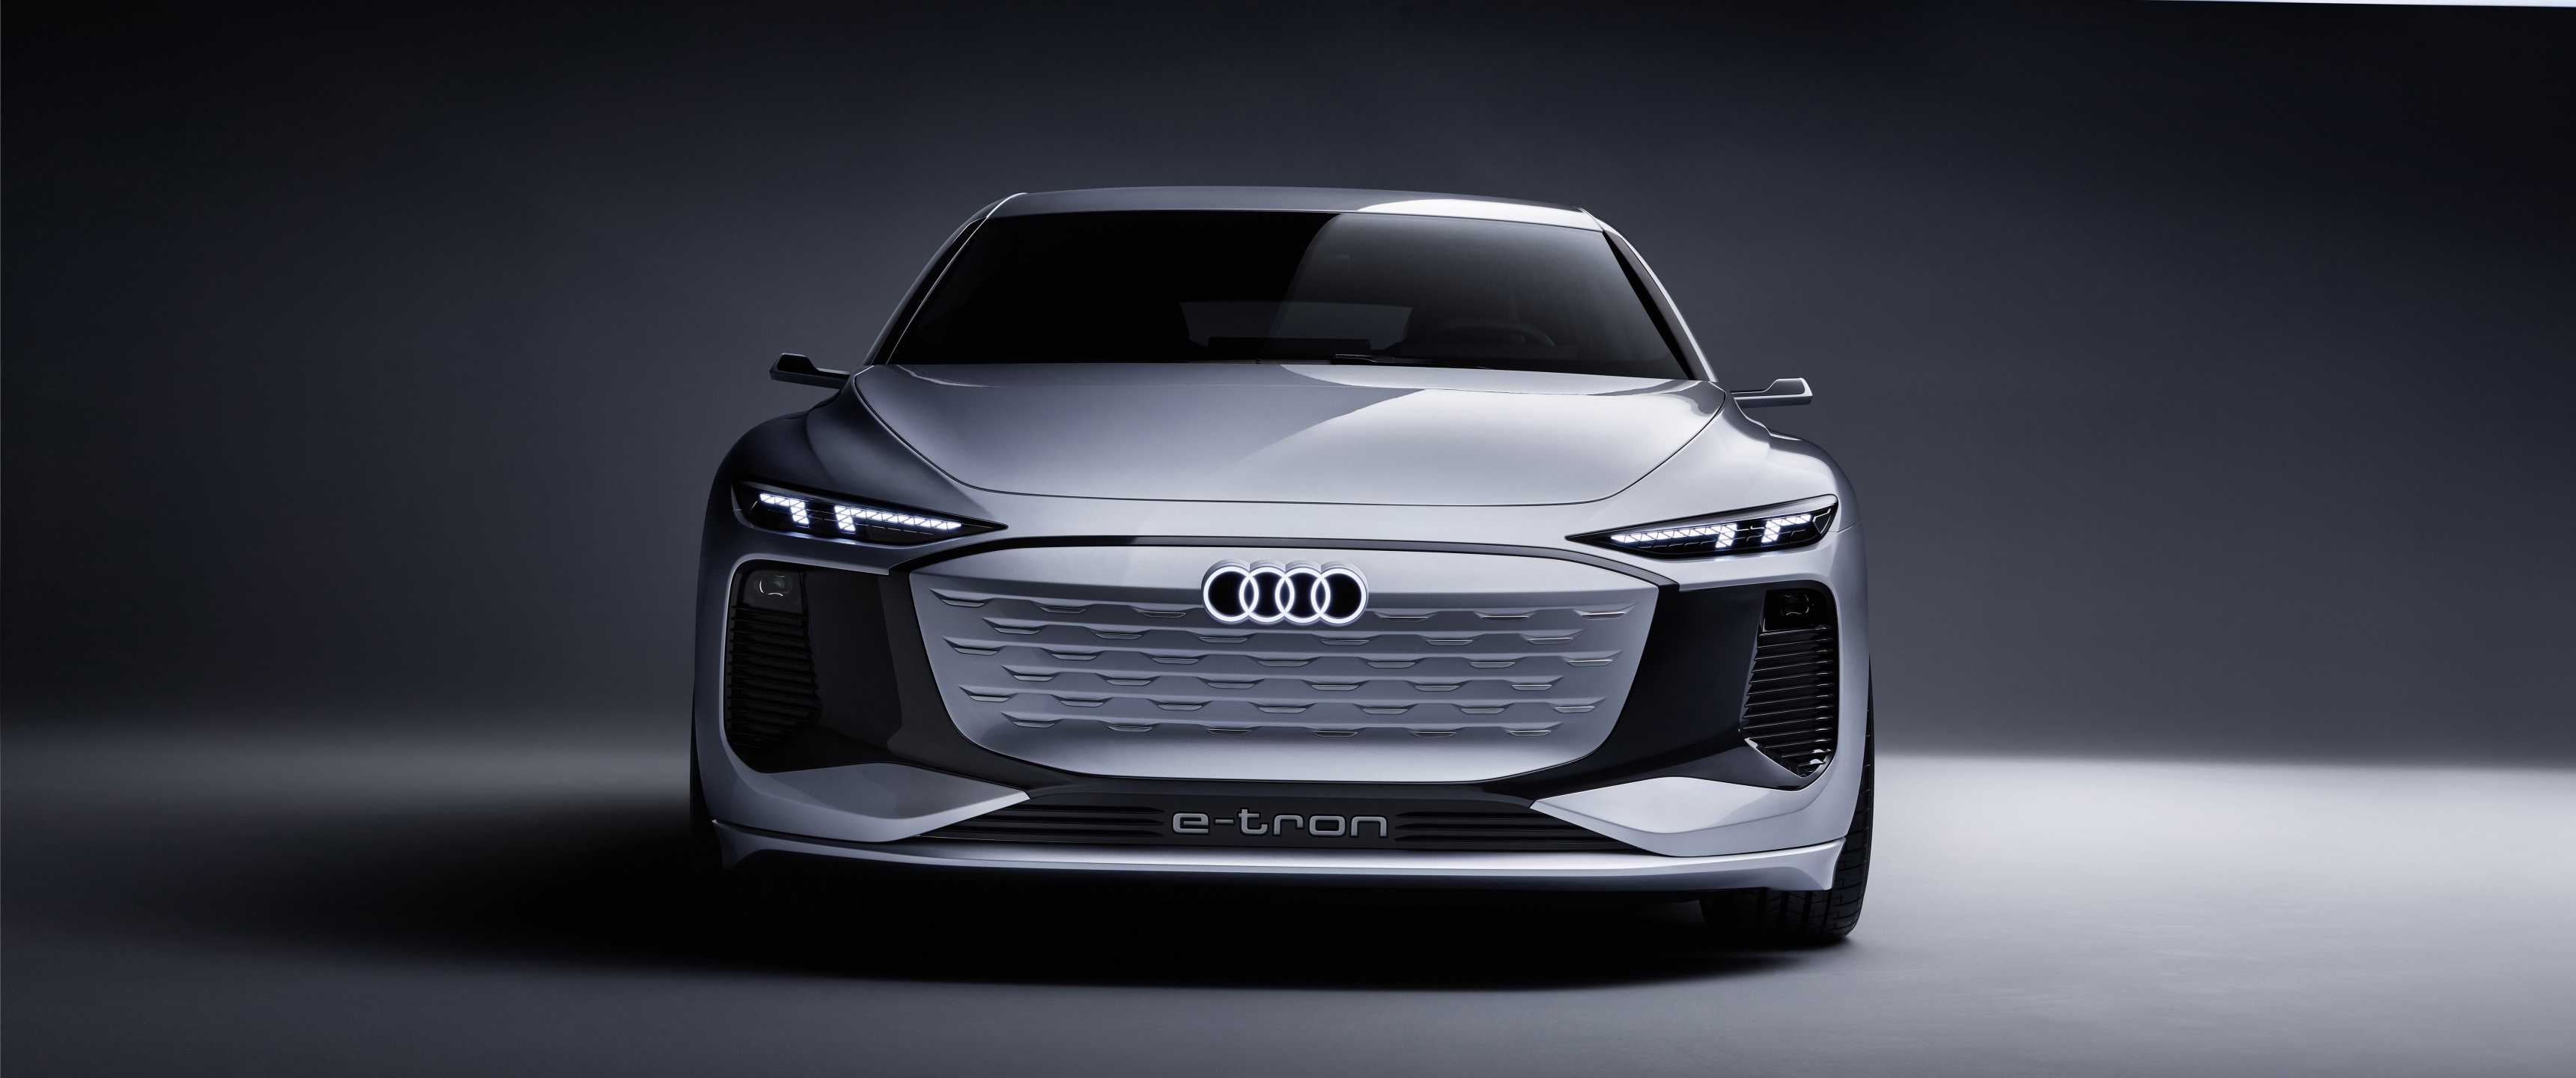 Audi A6 e-tron Concept Wallpaper 4K, Electric cars, 2021, 5K, Black/Dark,  #5183